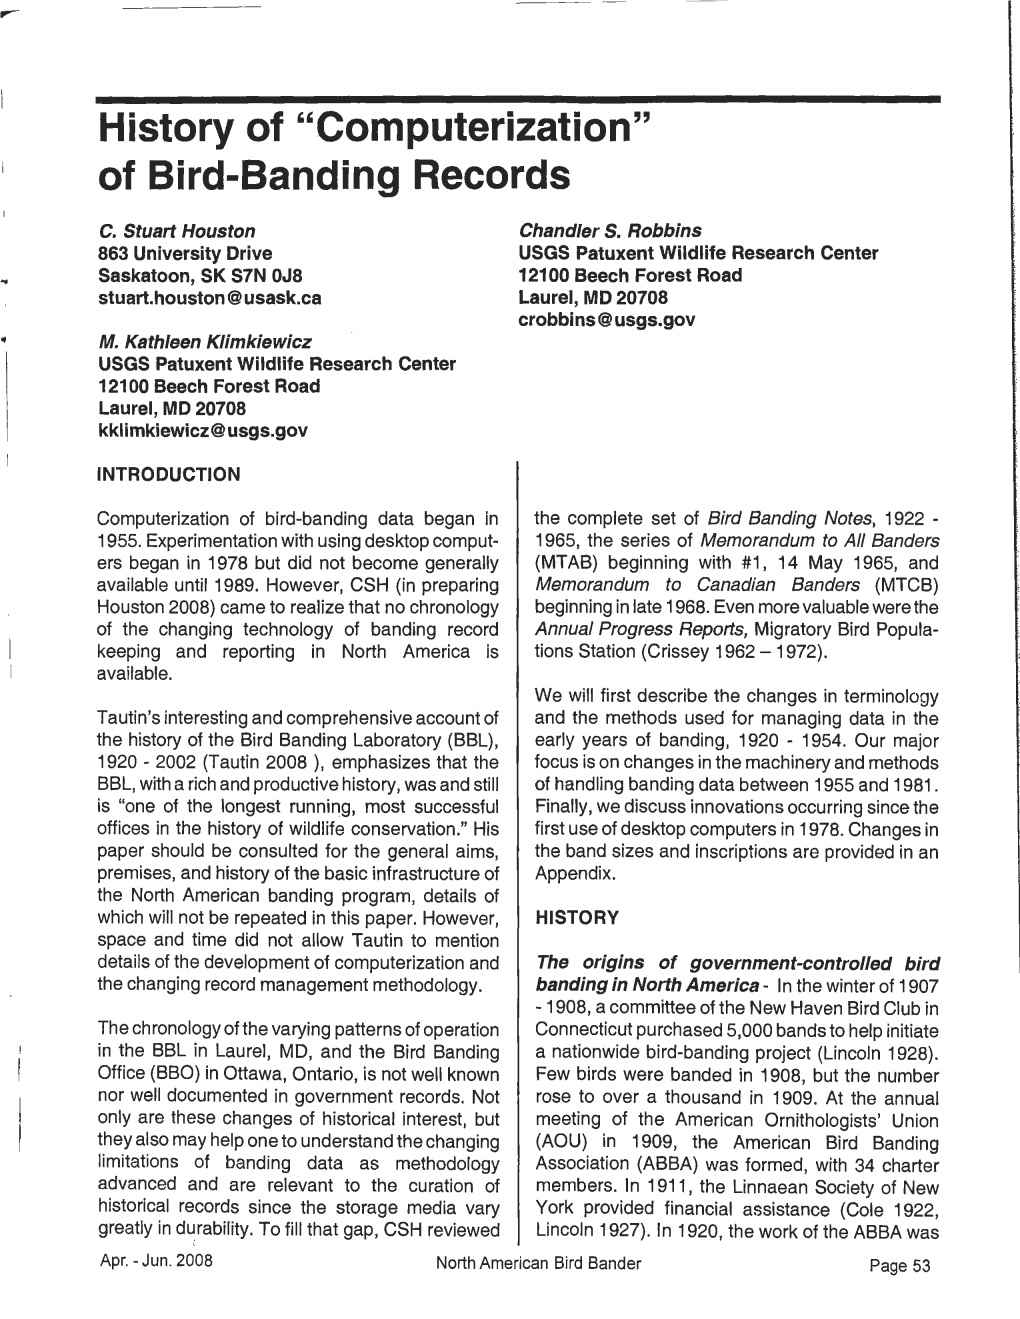 Of Bird-Banding Records